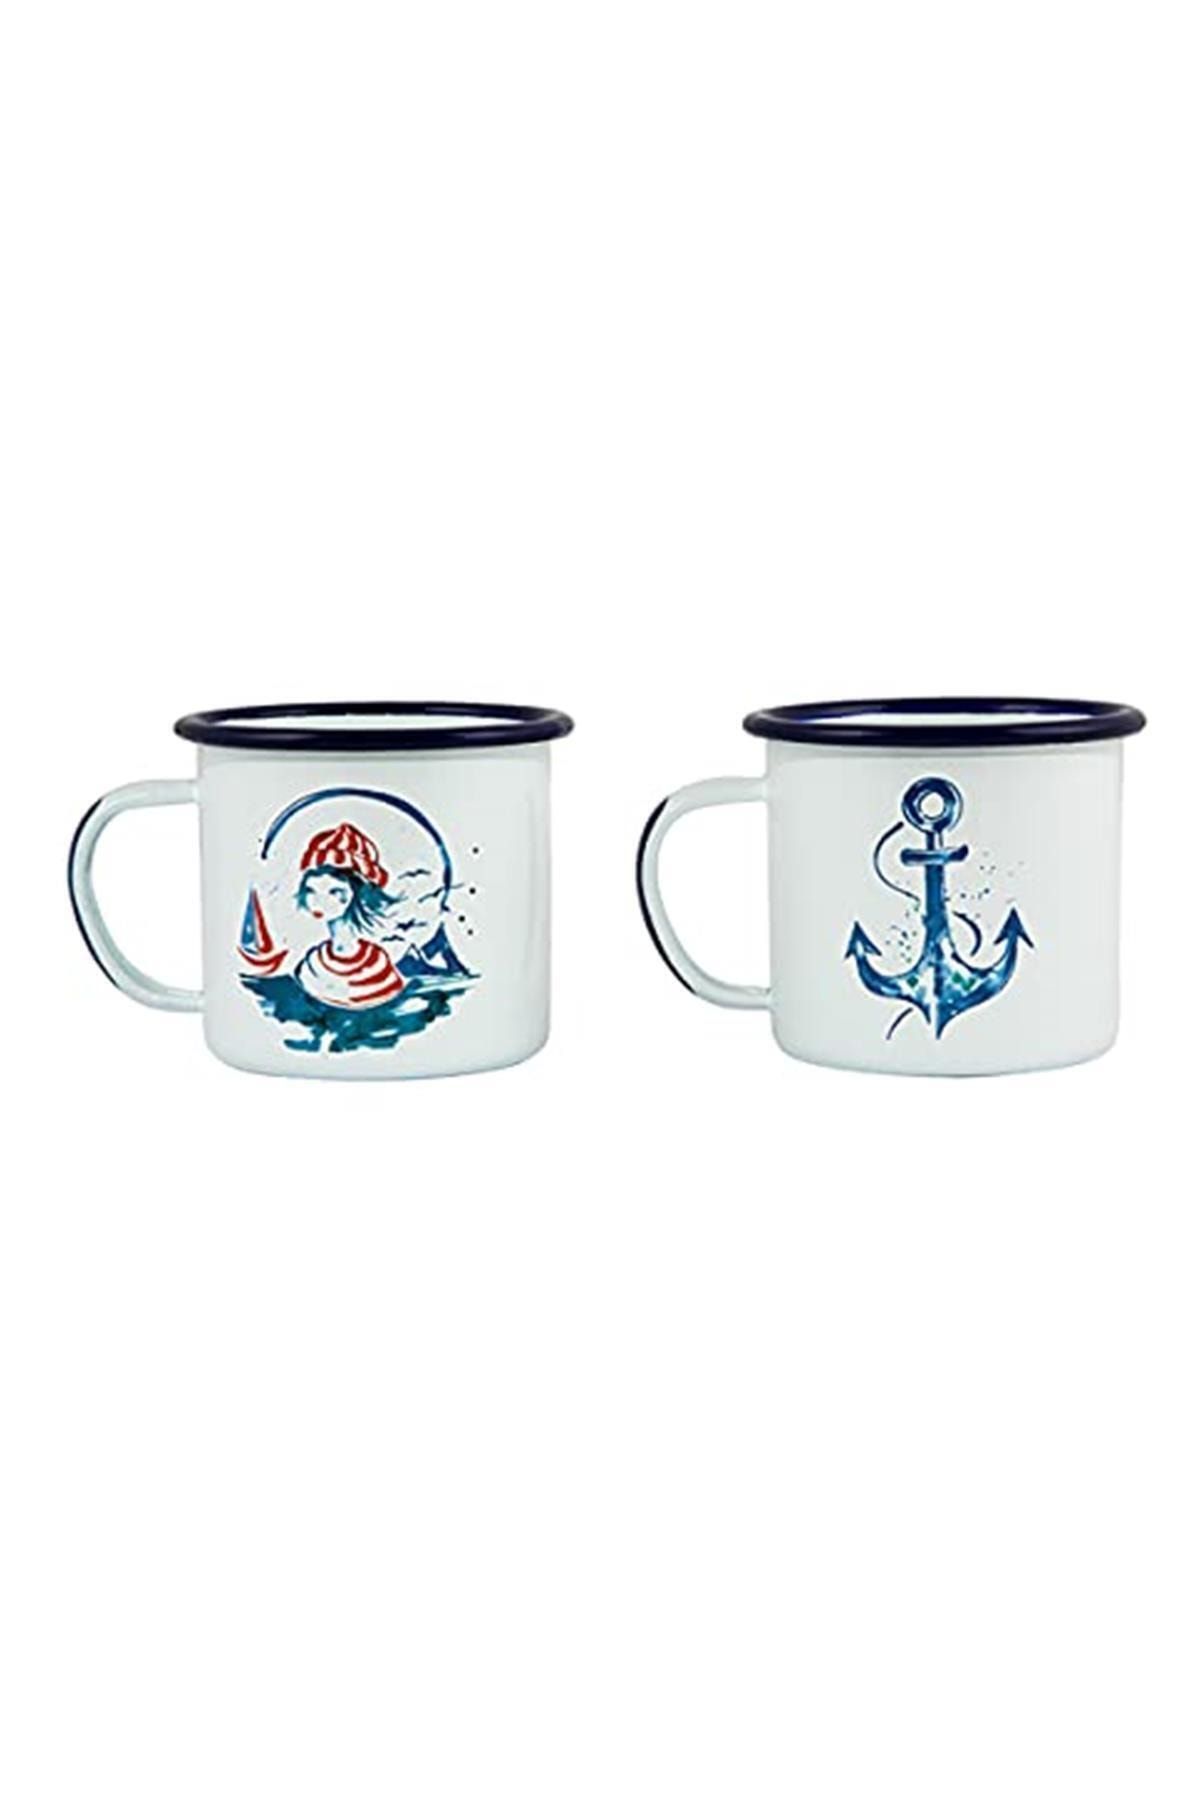 ANEMOSS Marka: Denizci Kız-çapa 2'li Emaye Kupa Seti Kategori: Kupalar